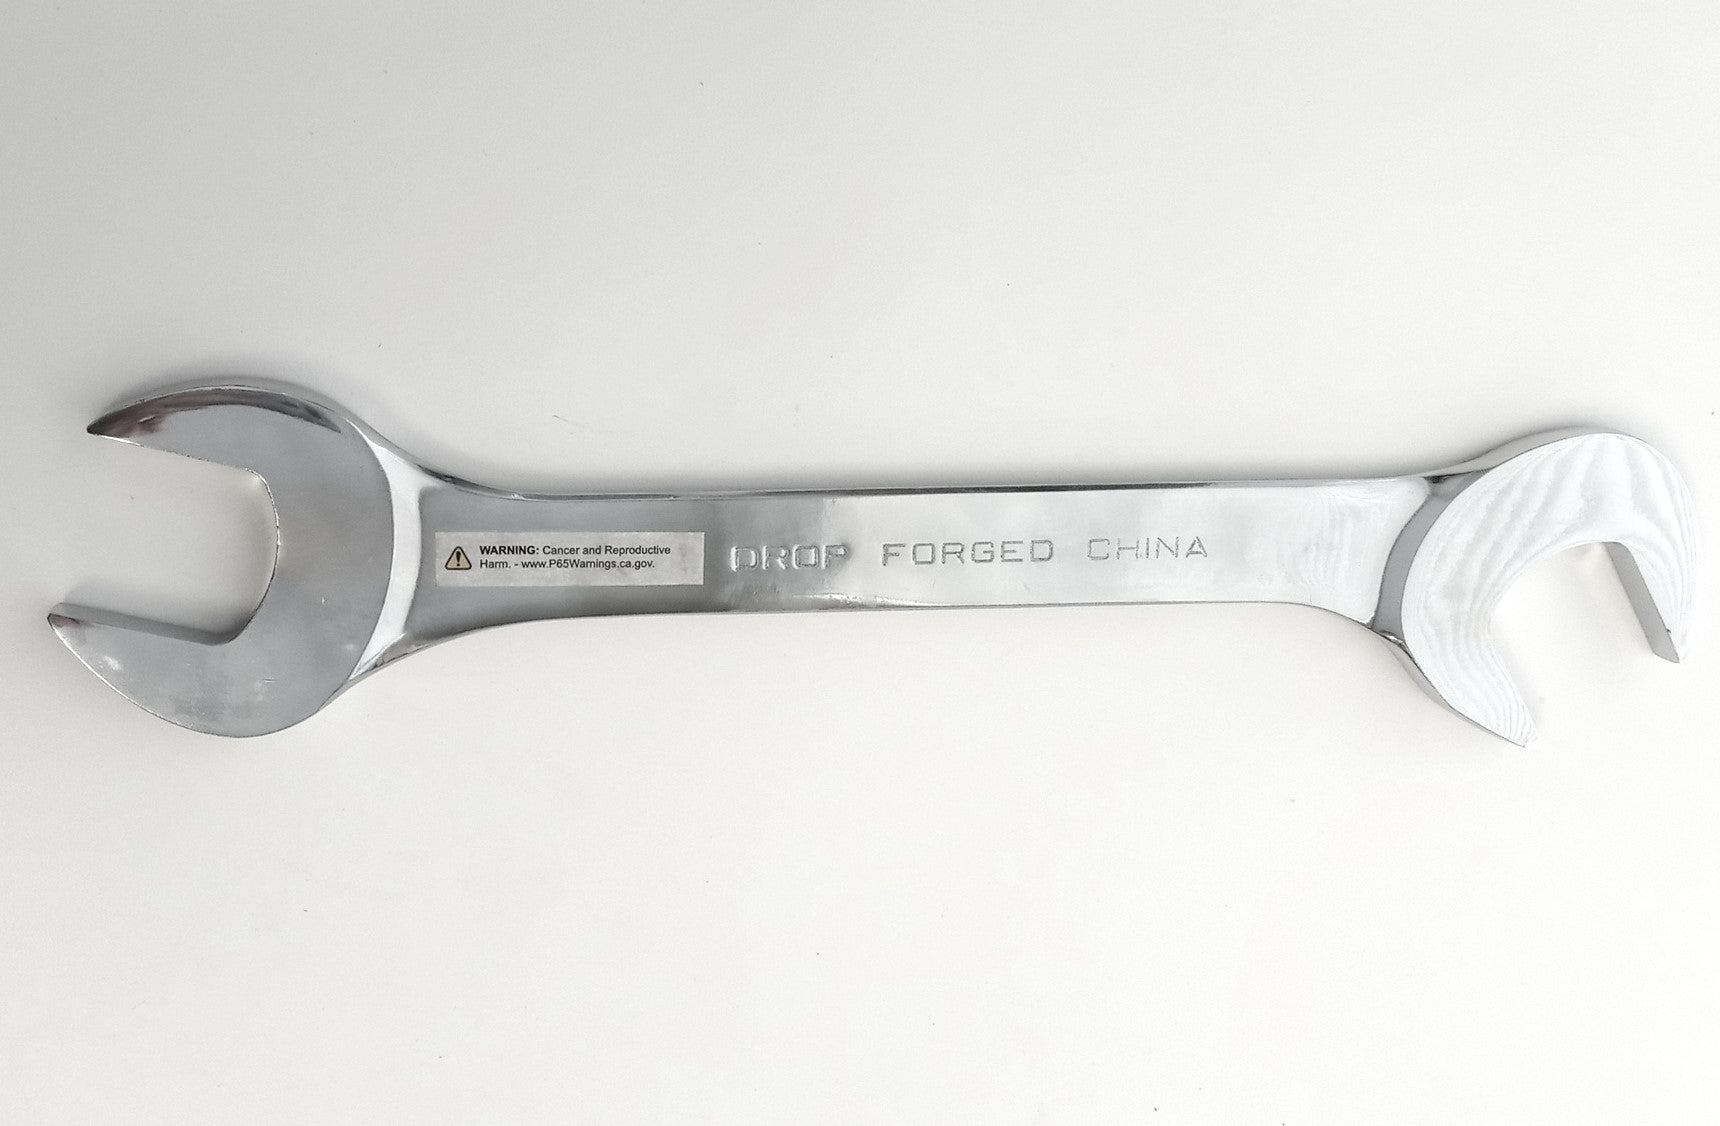 Sunex 991432M 32mm Fully Polished Jumbo Angle Head Wrench